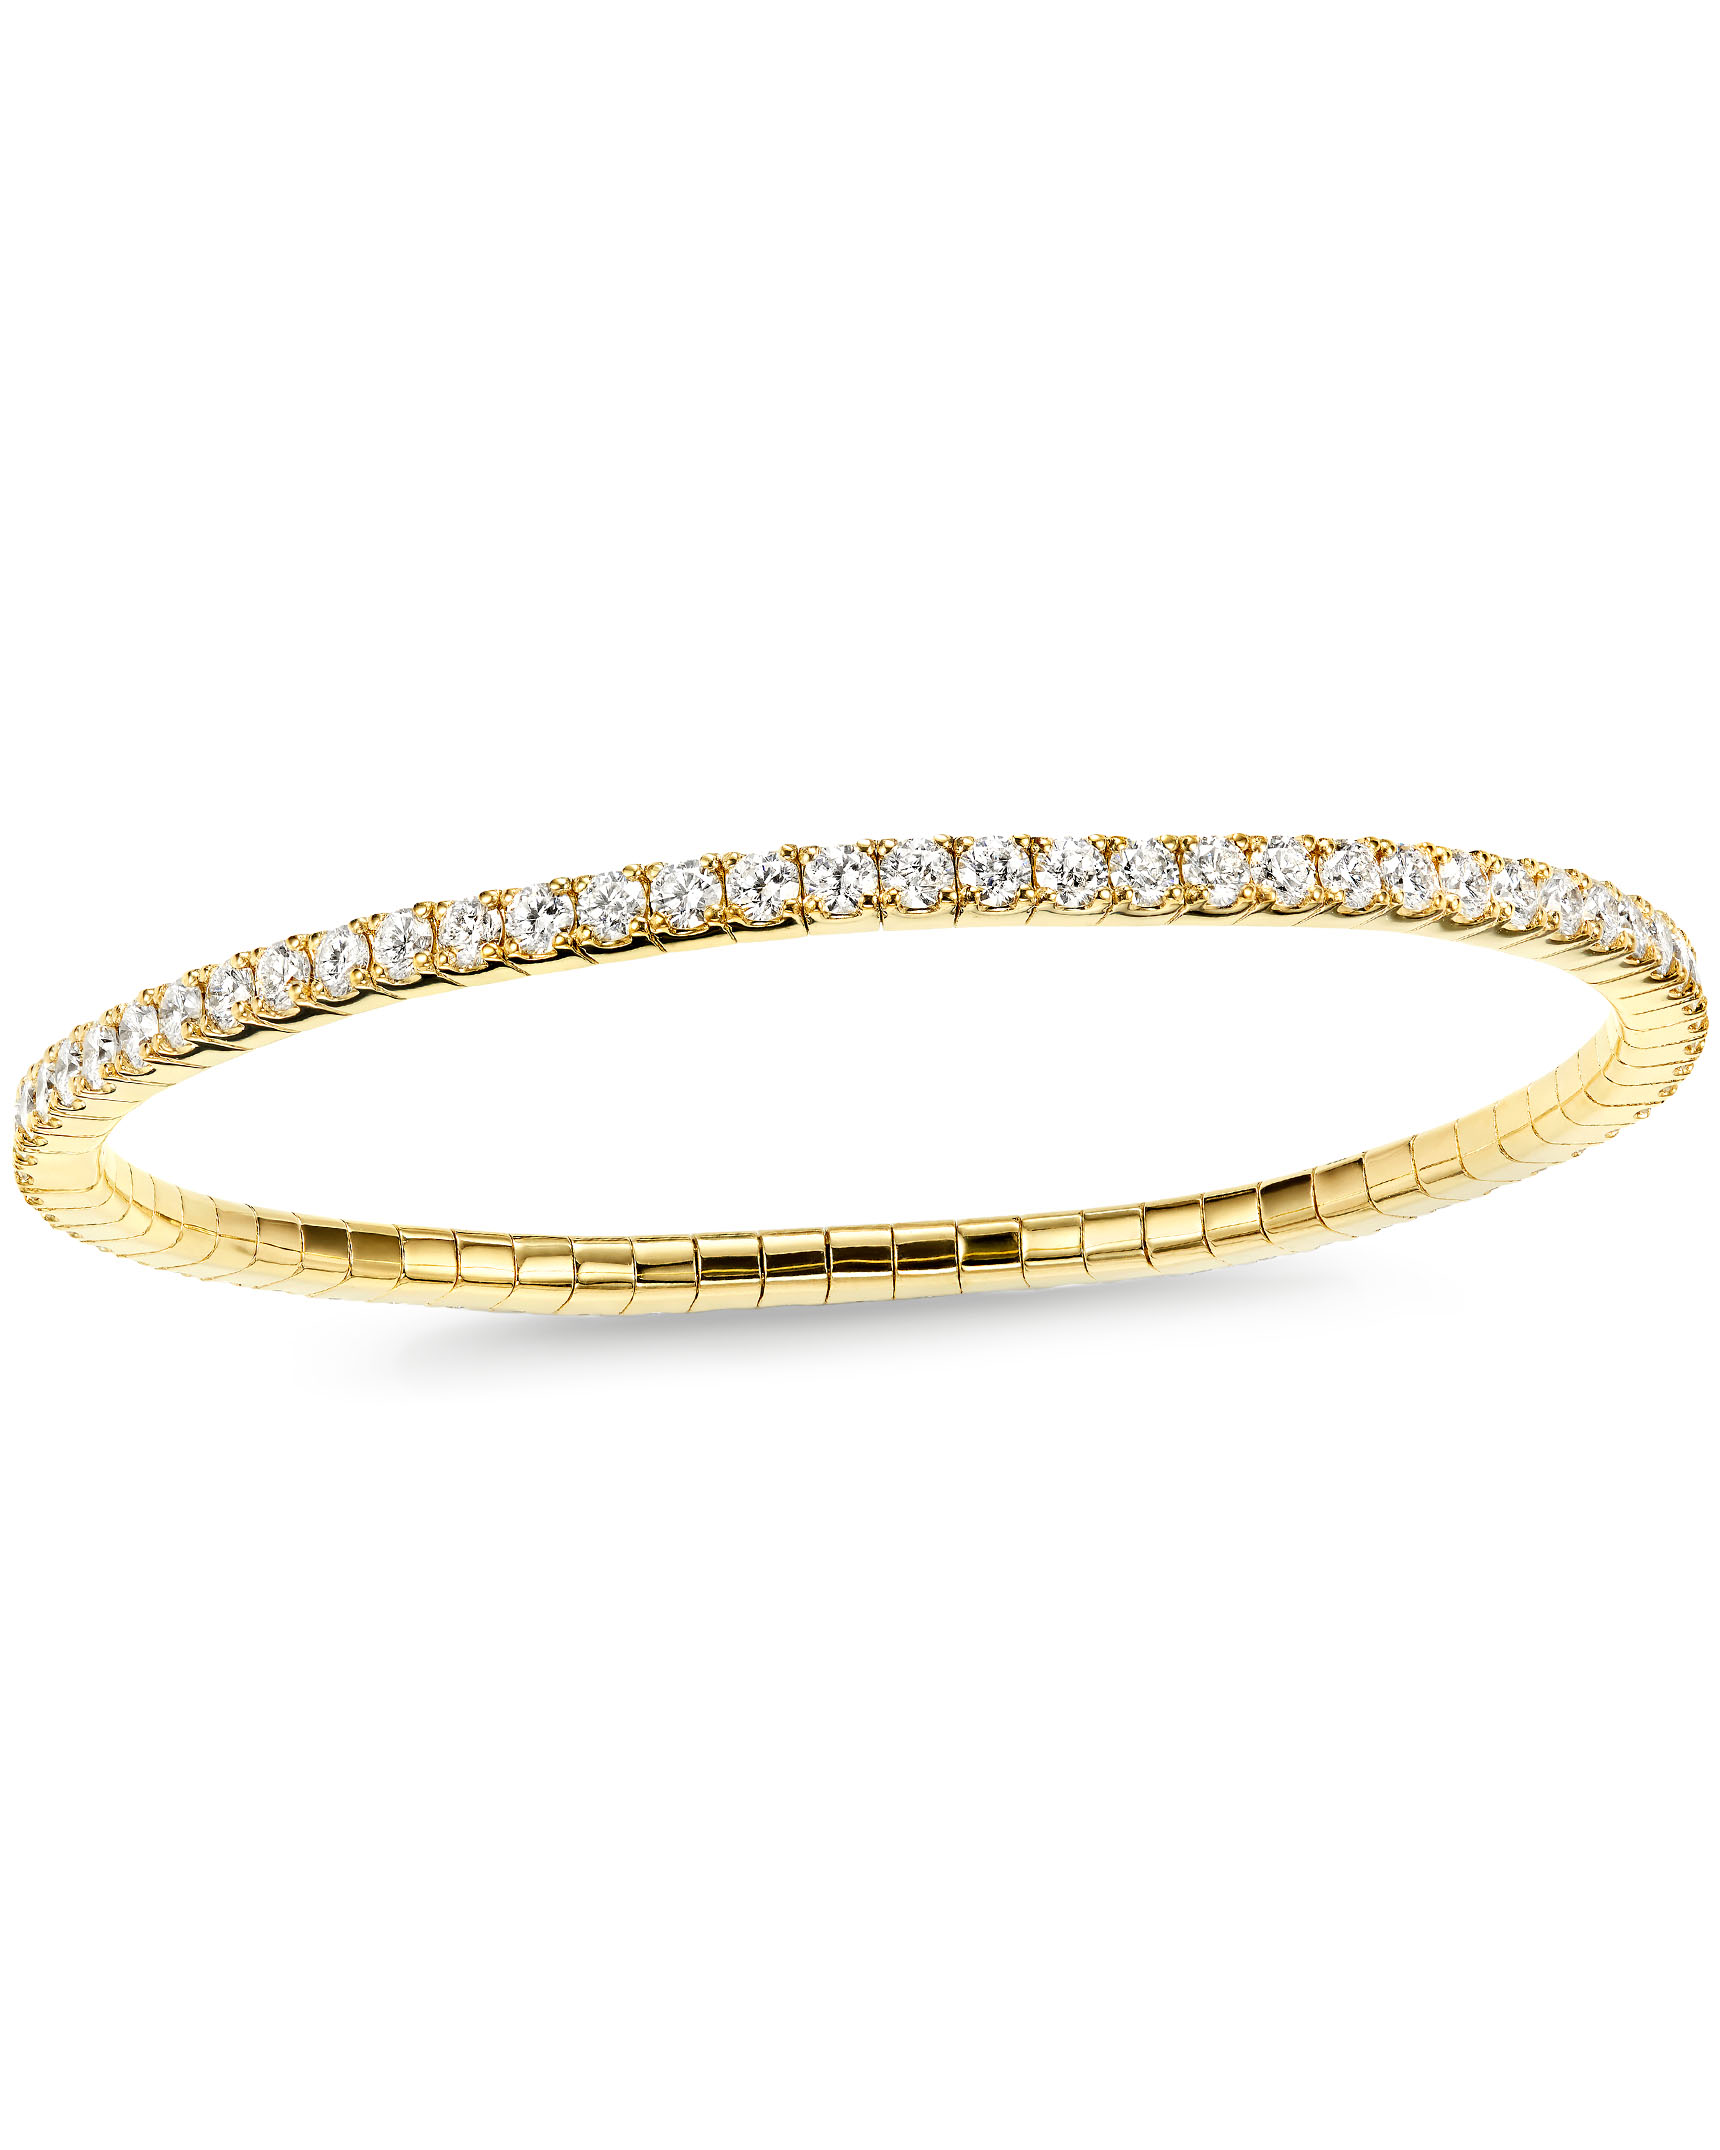 Florence Heart Diamond Bracelet in 18k White Gold Vermeil - ROSCE Jewelers